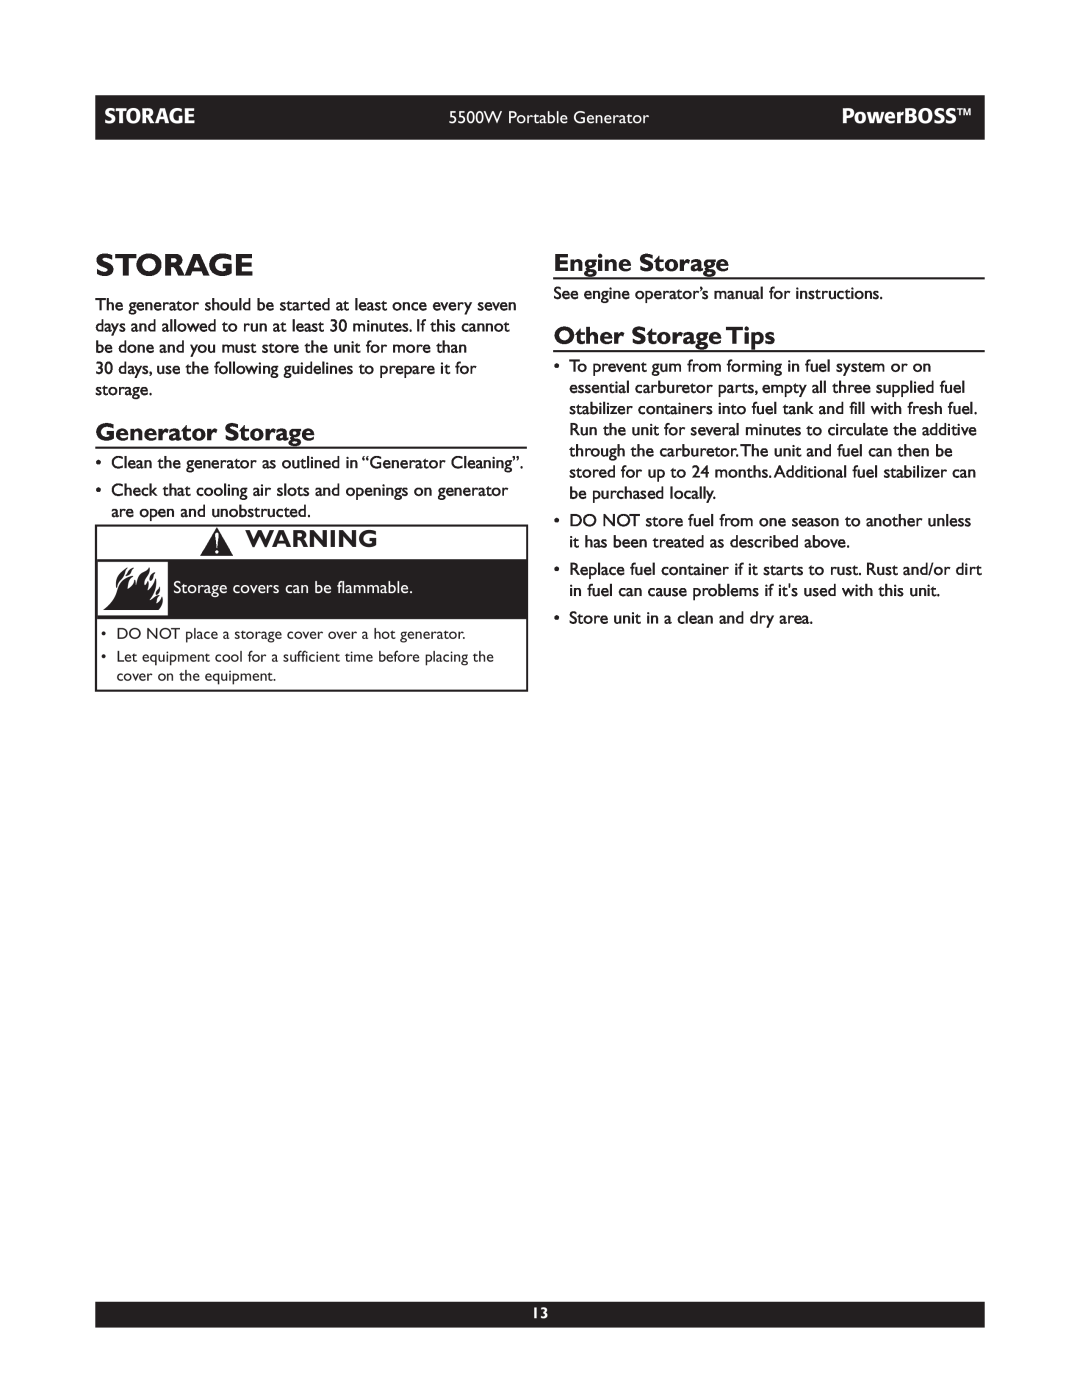 Briggs & Stratton 030255 manual Generator Storage, Engine Storage, Other Storage Tips, Storage covers can be flammable 